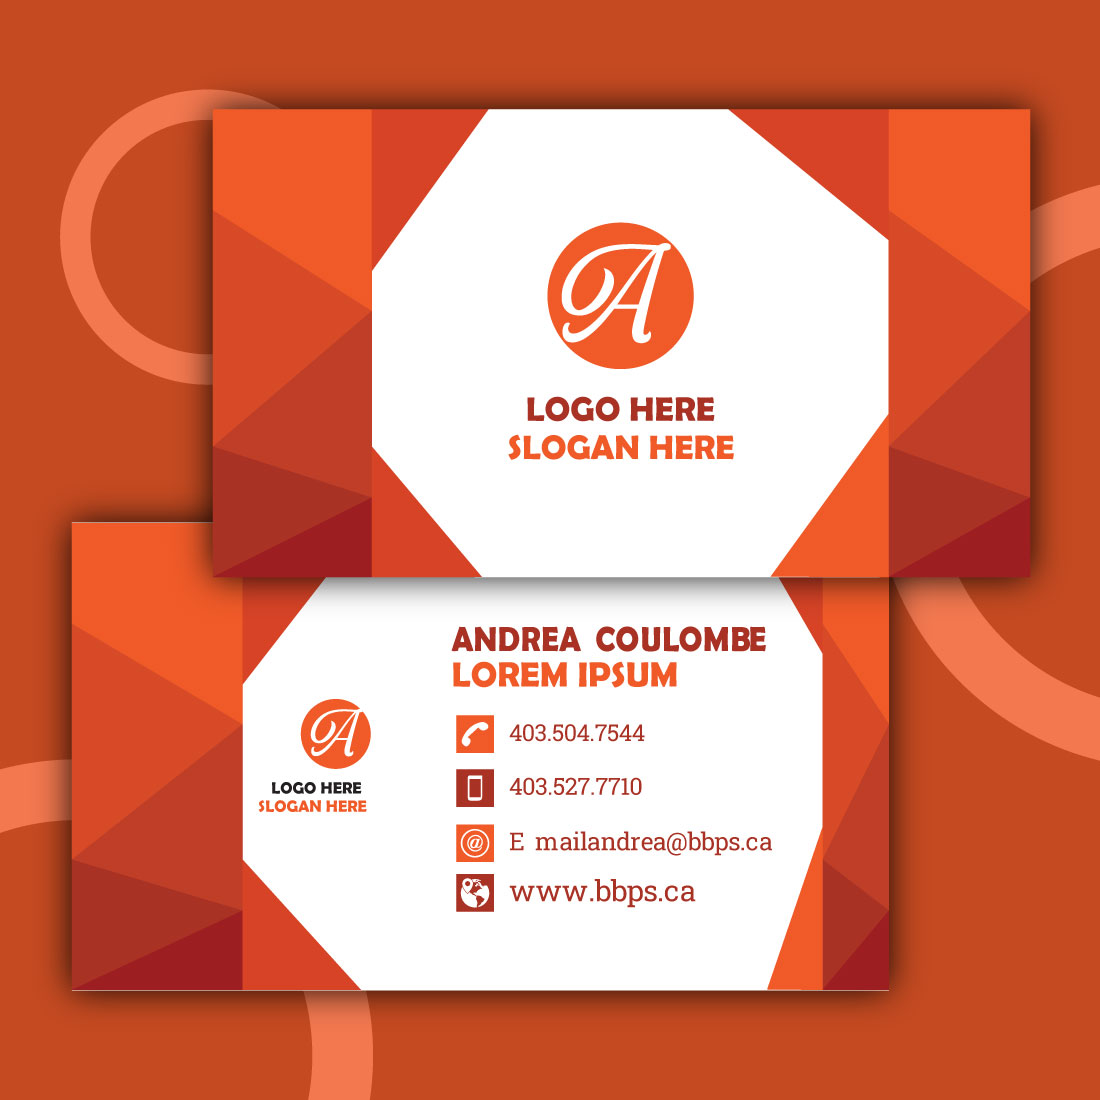 Minimal Business Card Orange Design cover image.